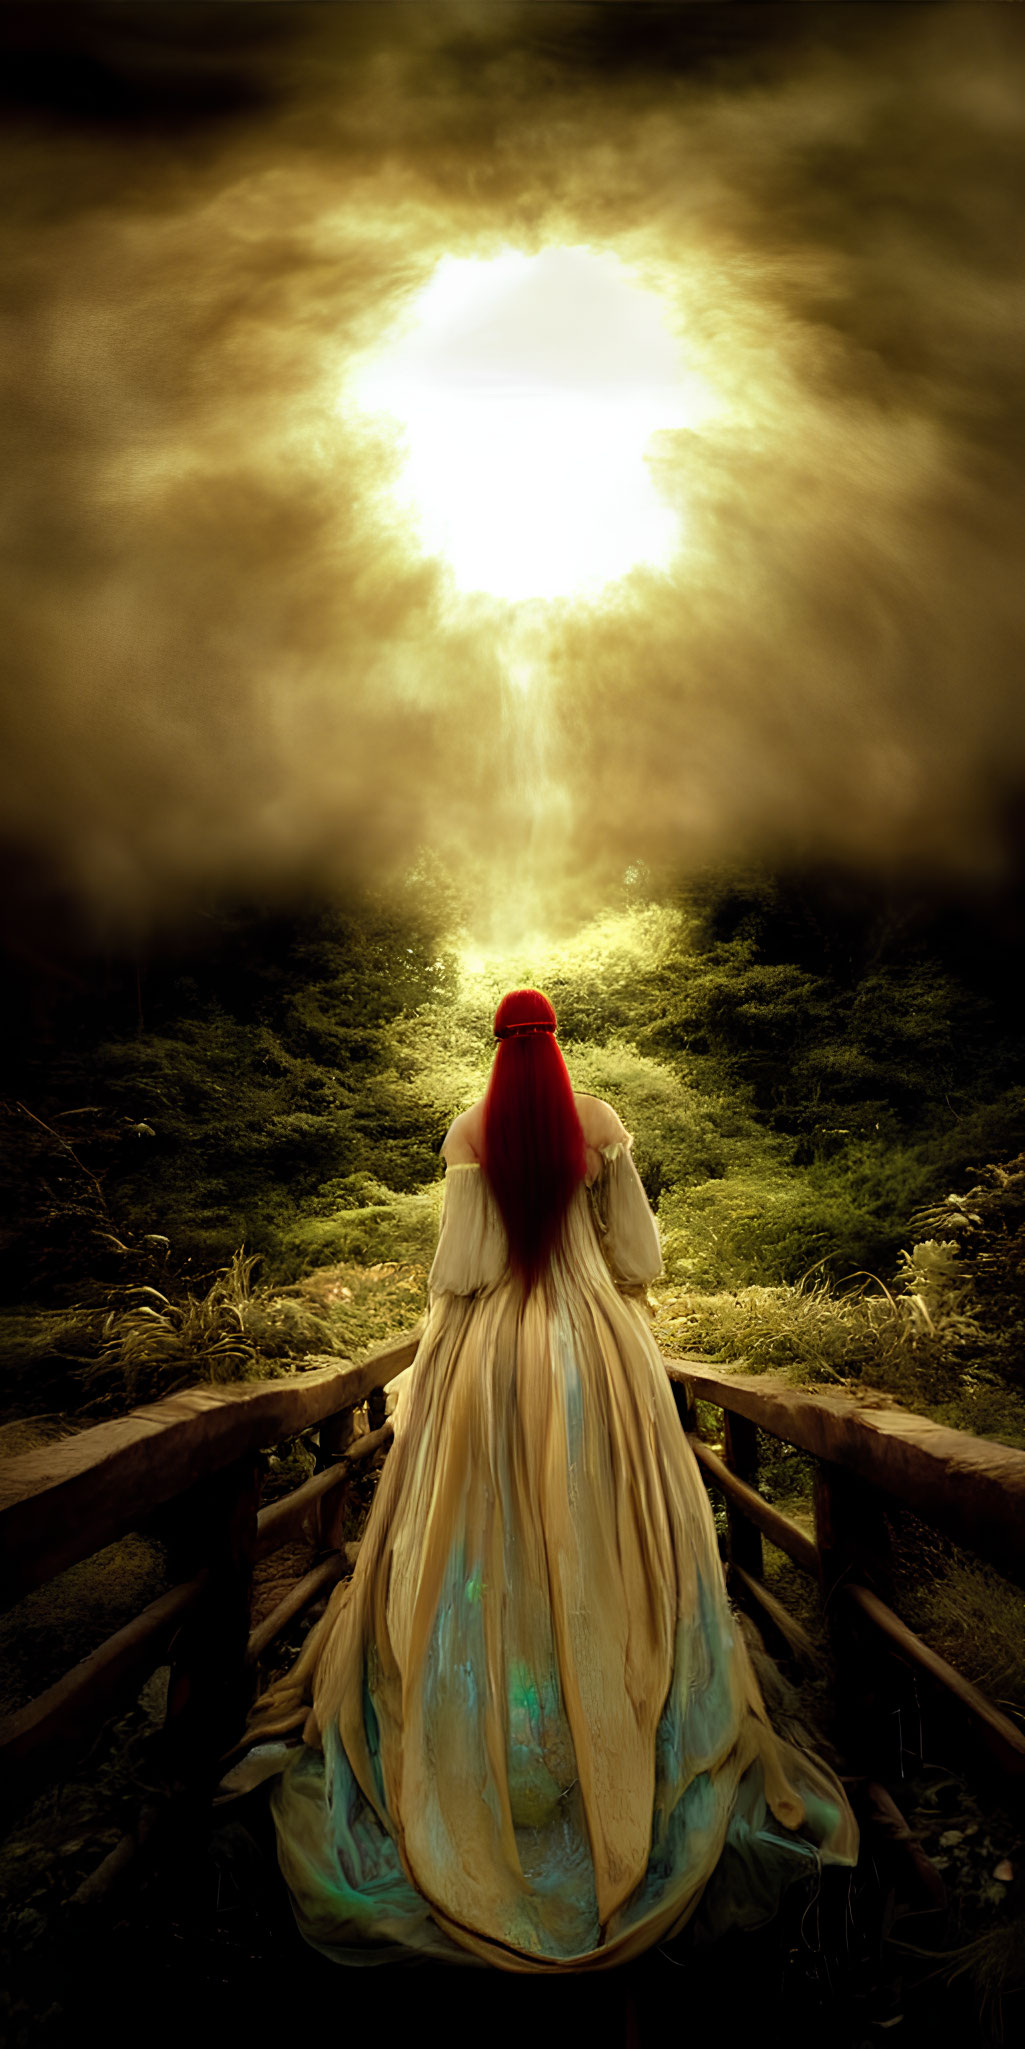 Woman in flowing dress on wooden bridge gazes at luminous sunlit forest